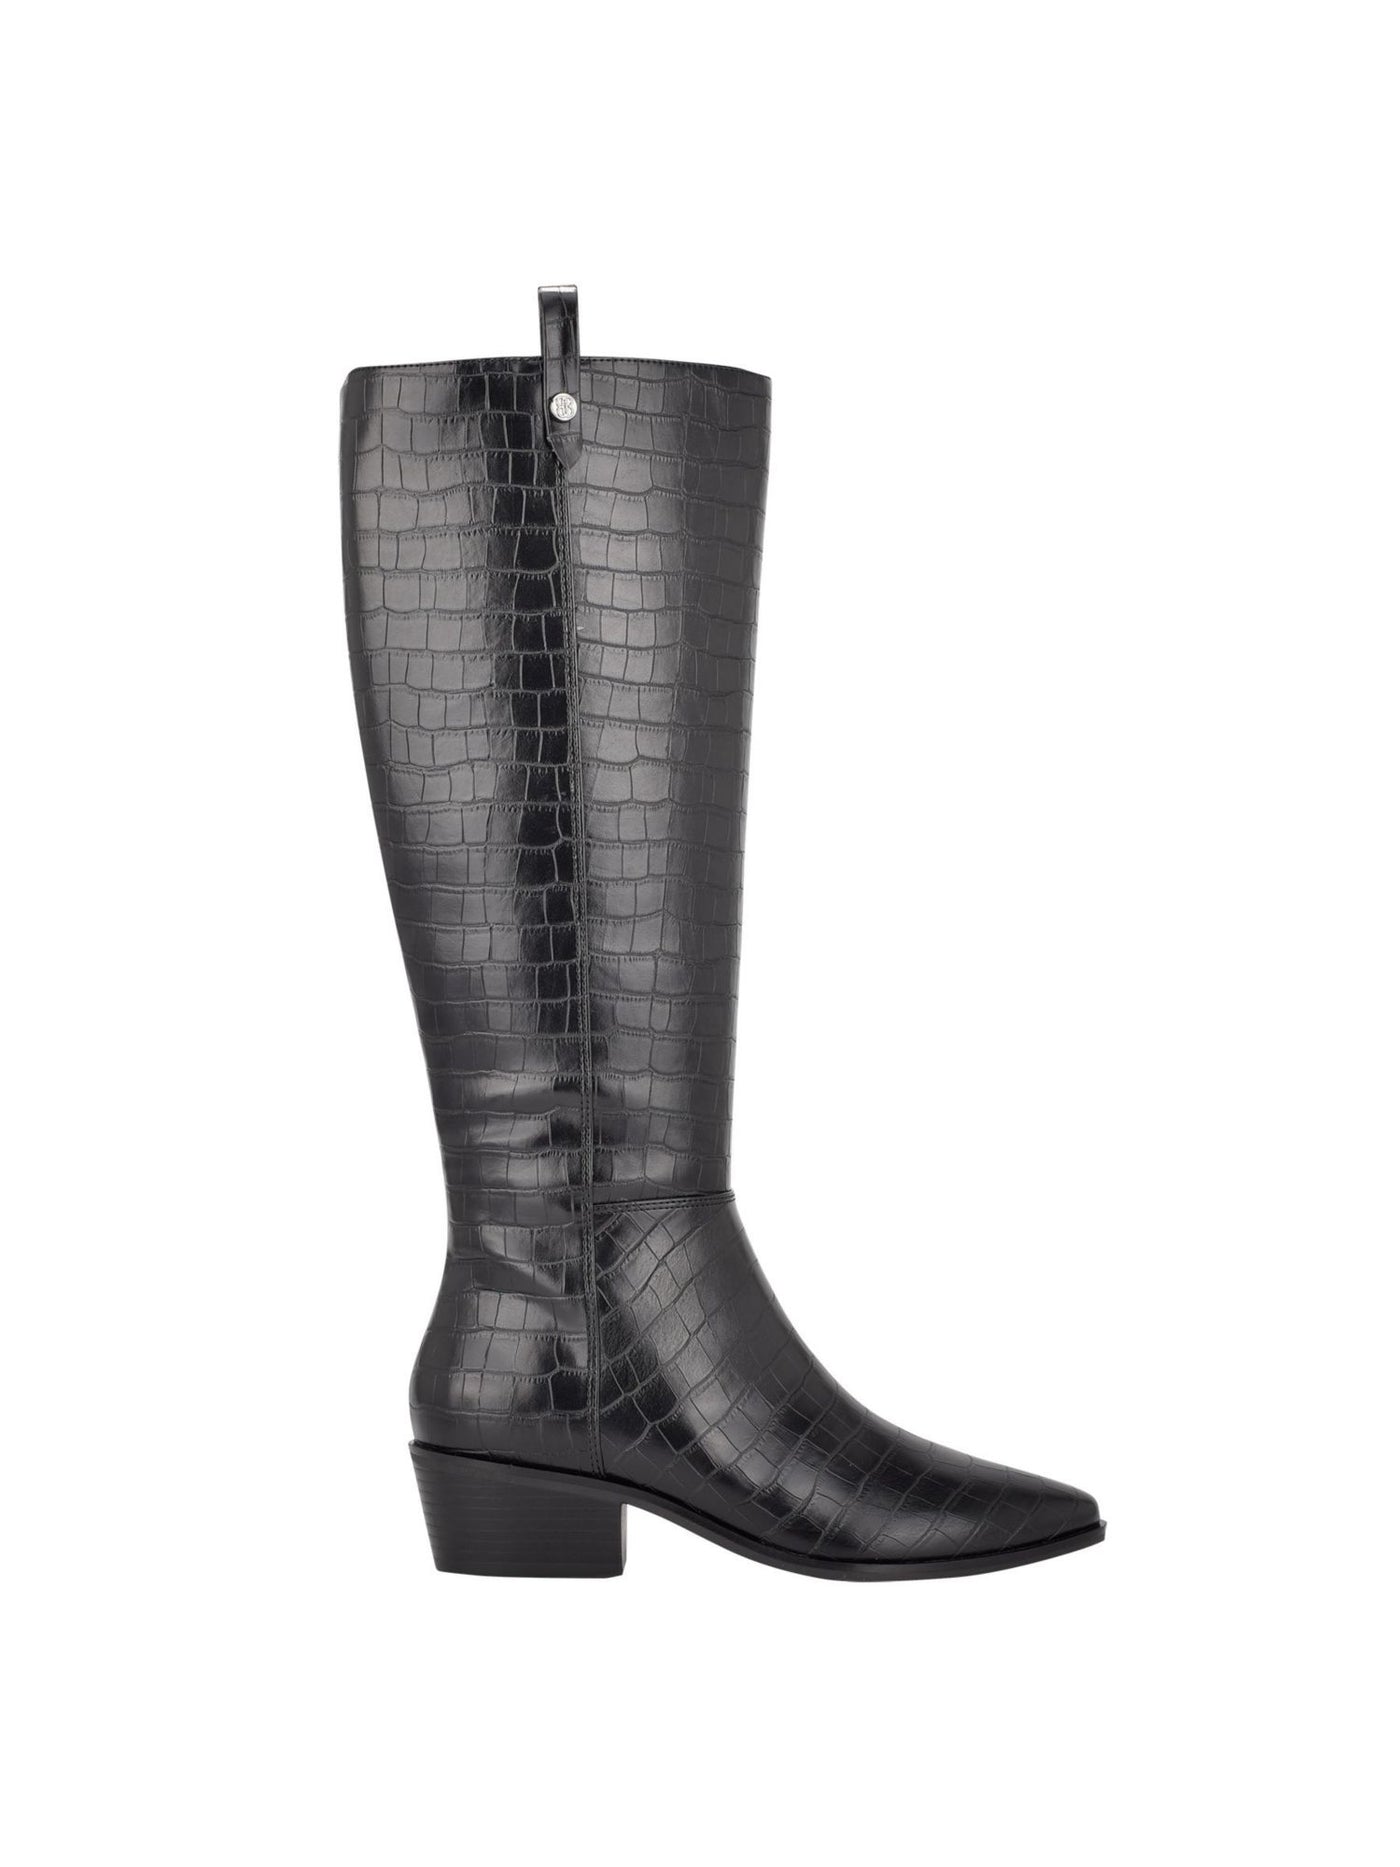 BANDOLINO Womens Black Cushioned Almond Toe Stacked Heel Zip-Up Dress Boots 8.5 M